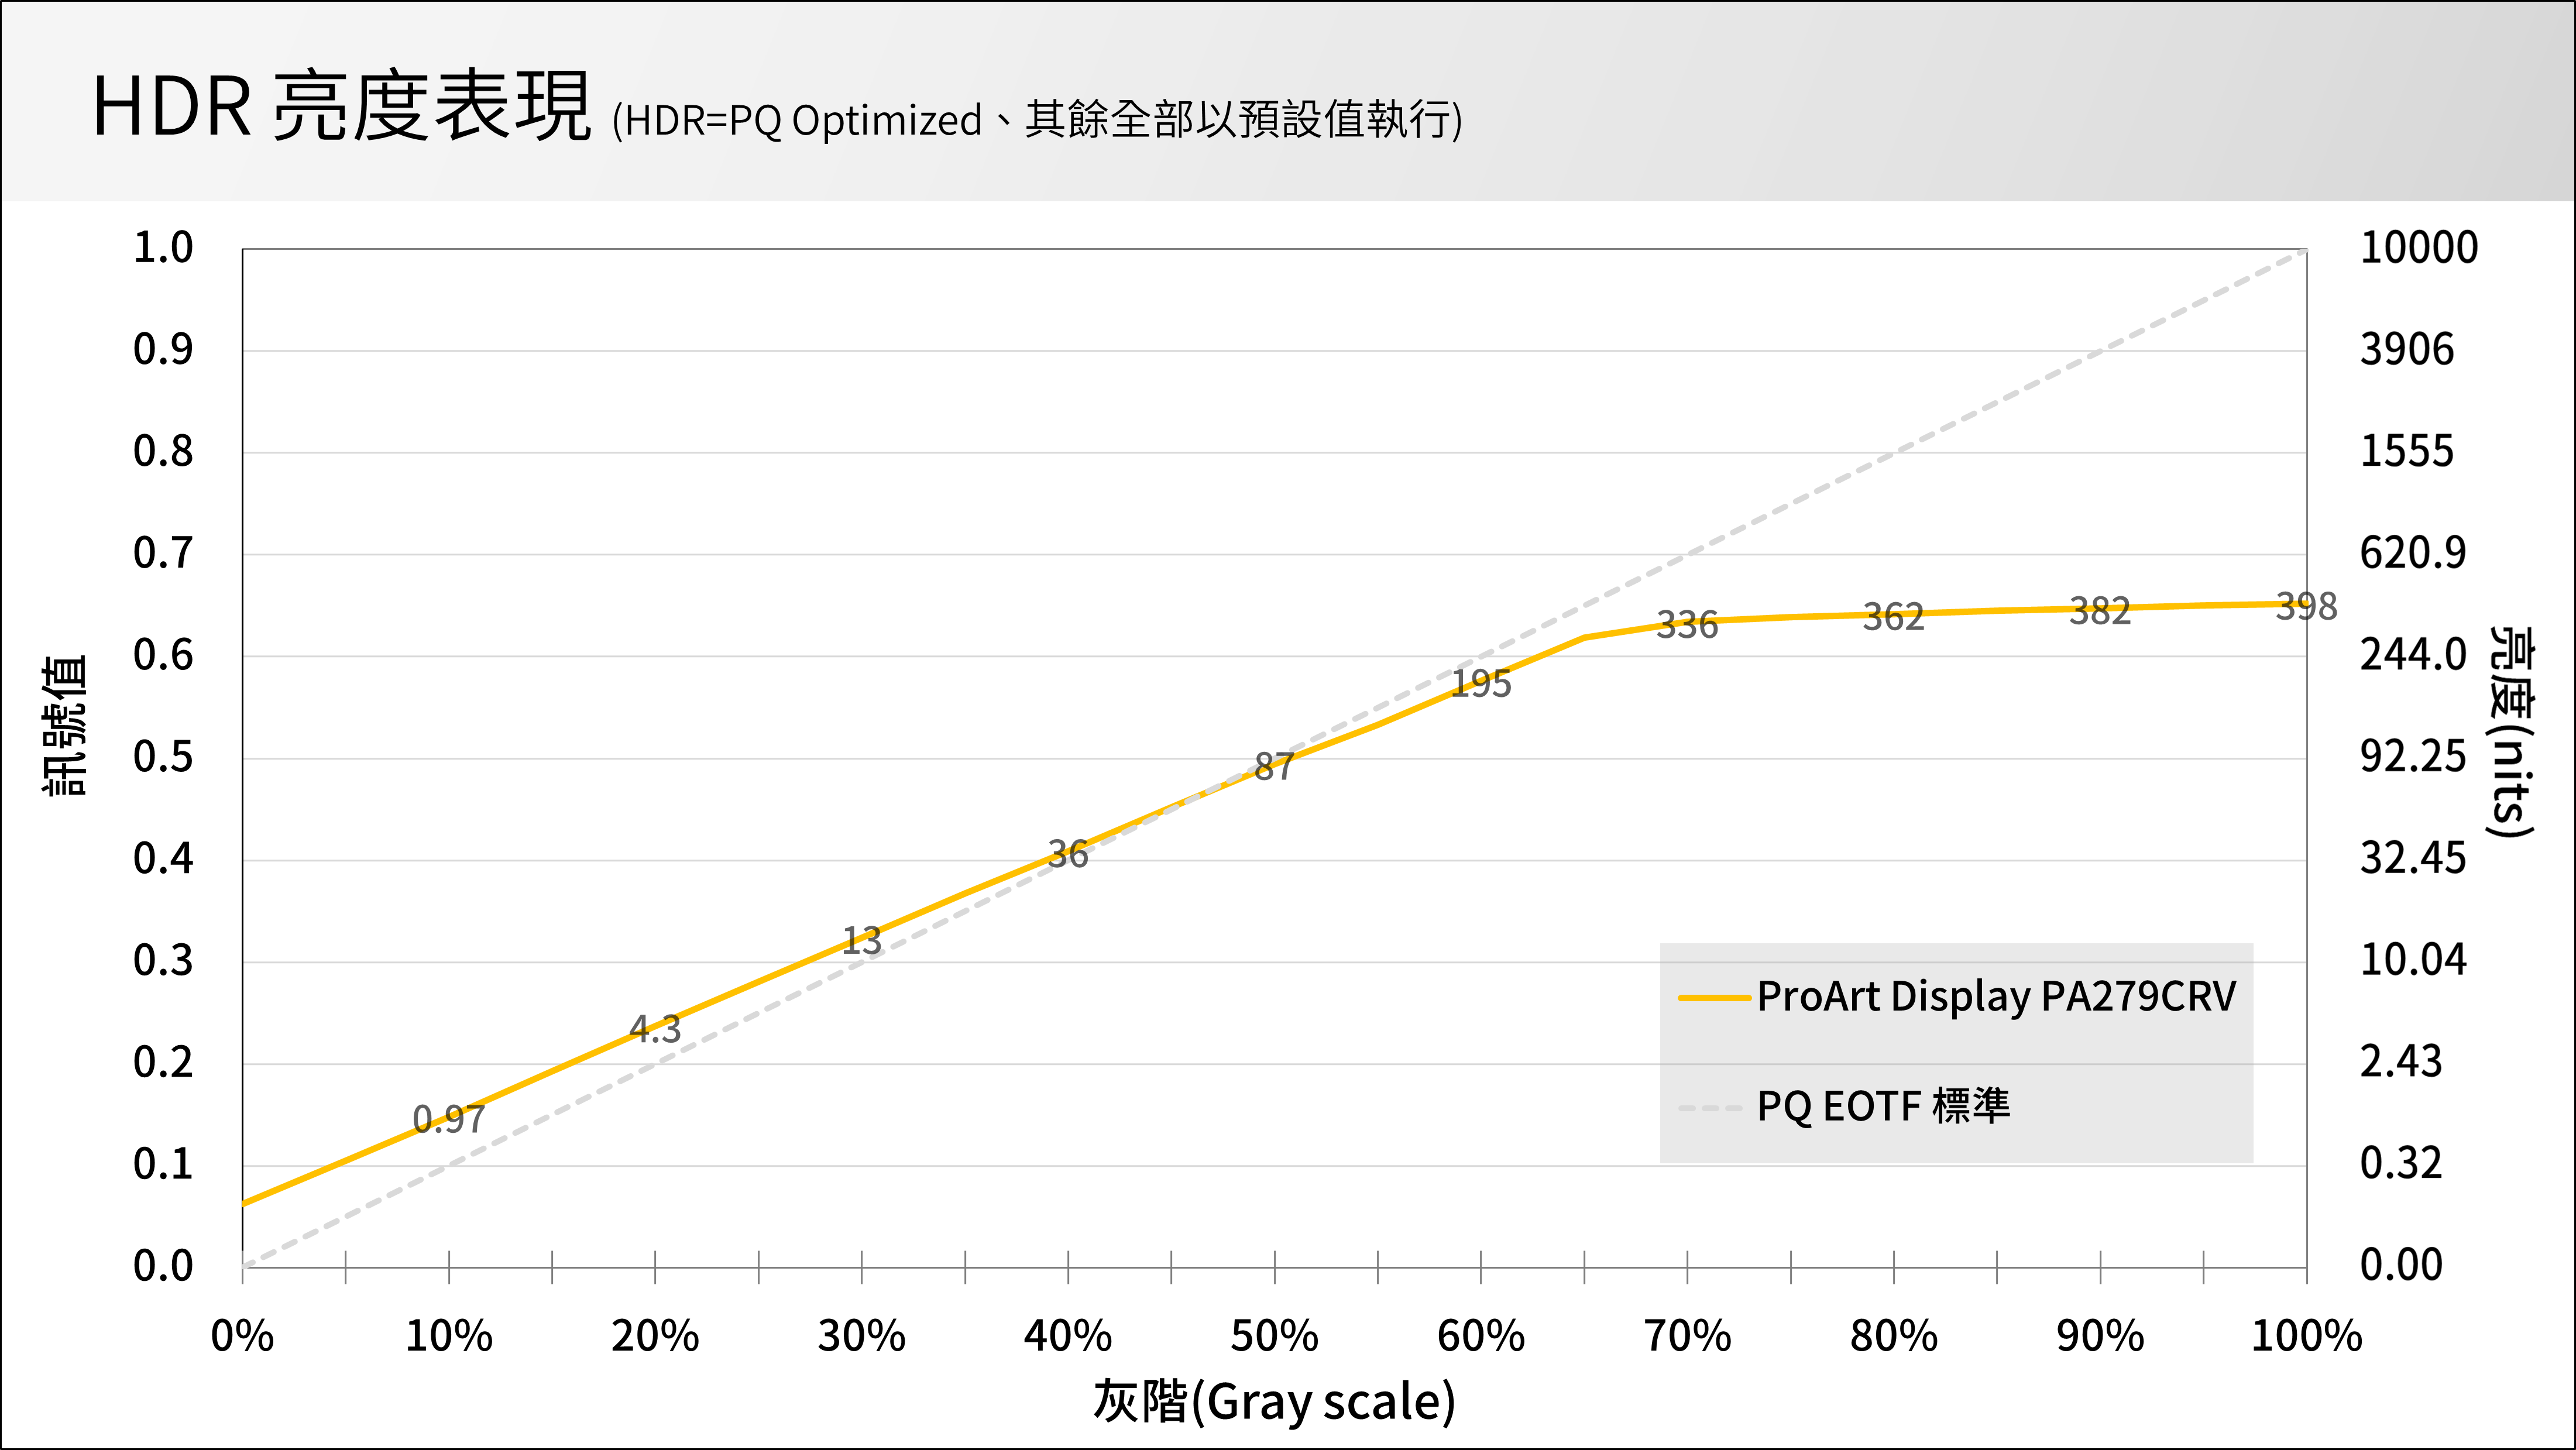 HDR PQ Optimized 模式 EOTF 曲線